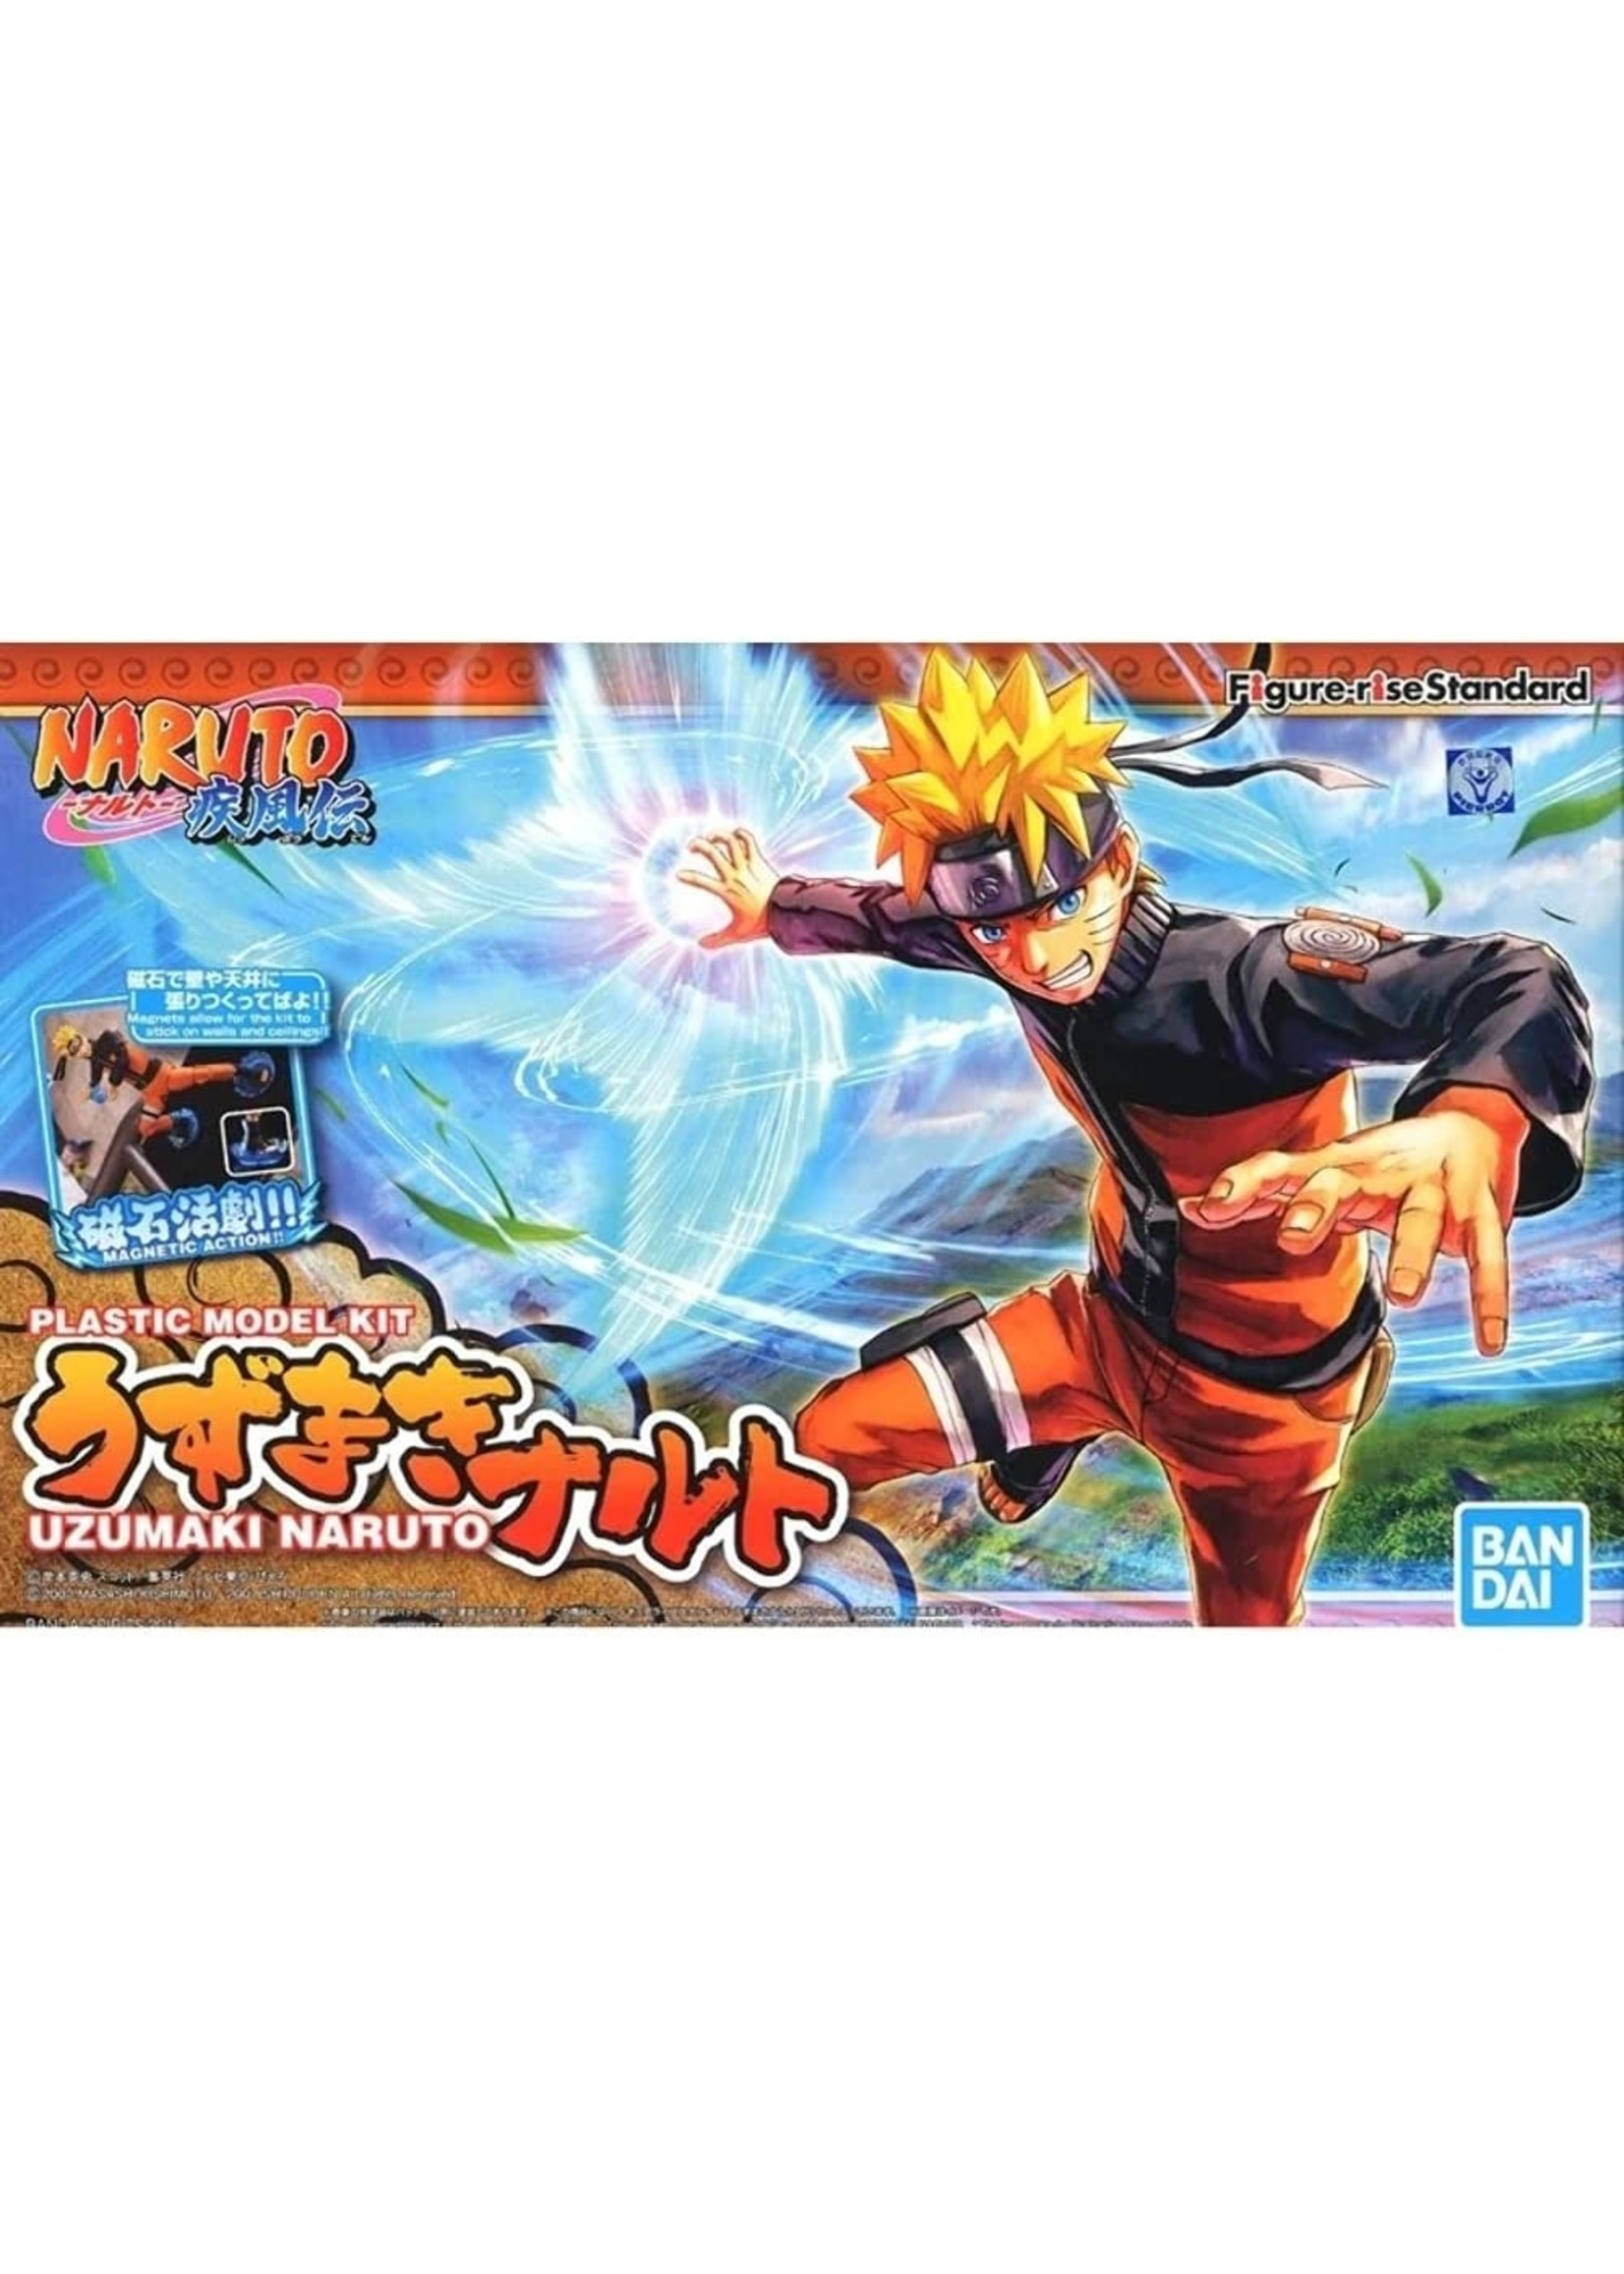 Bandai Uzumaki Naruto Figure-rise Standard